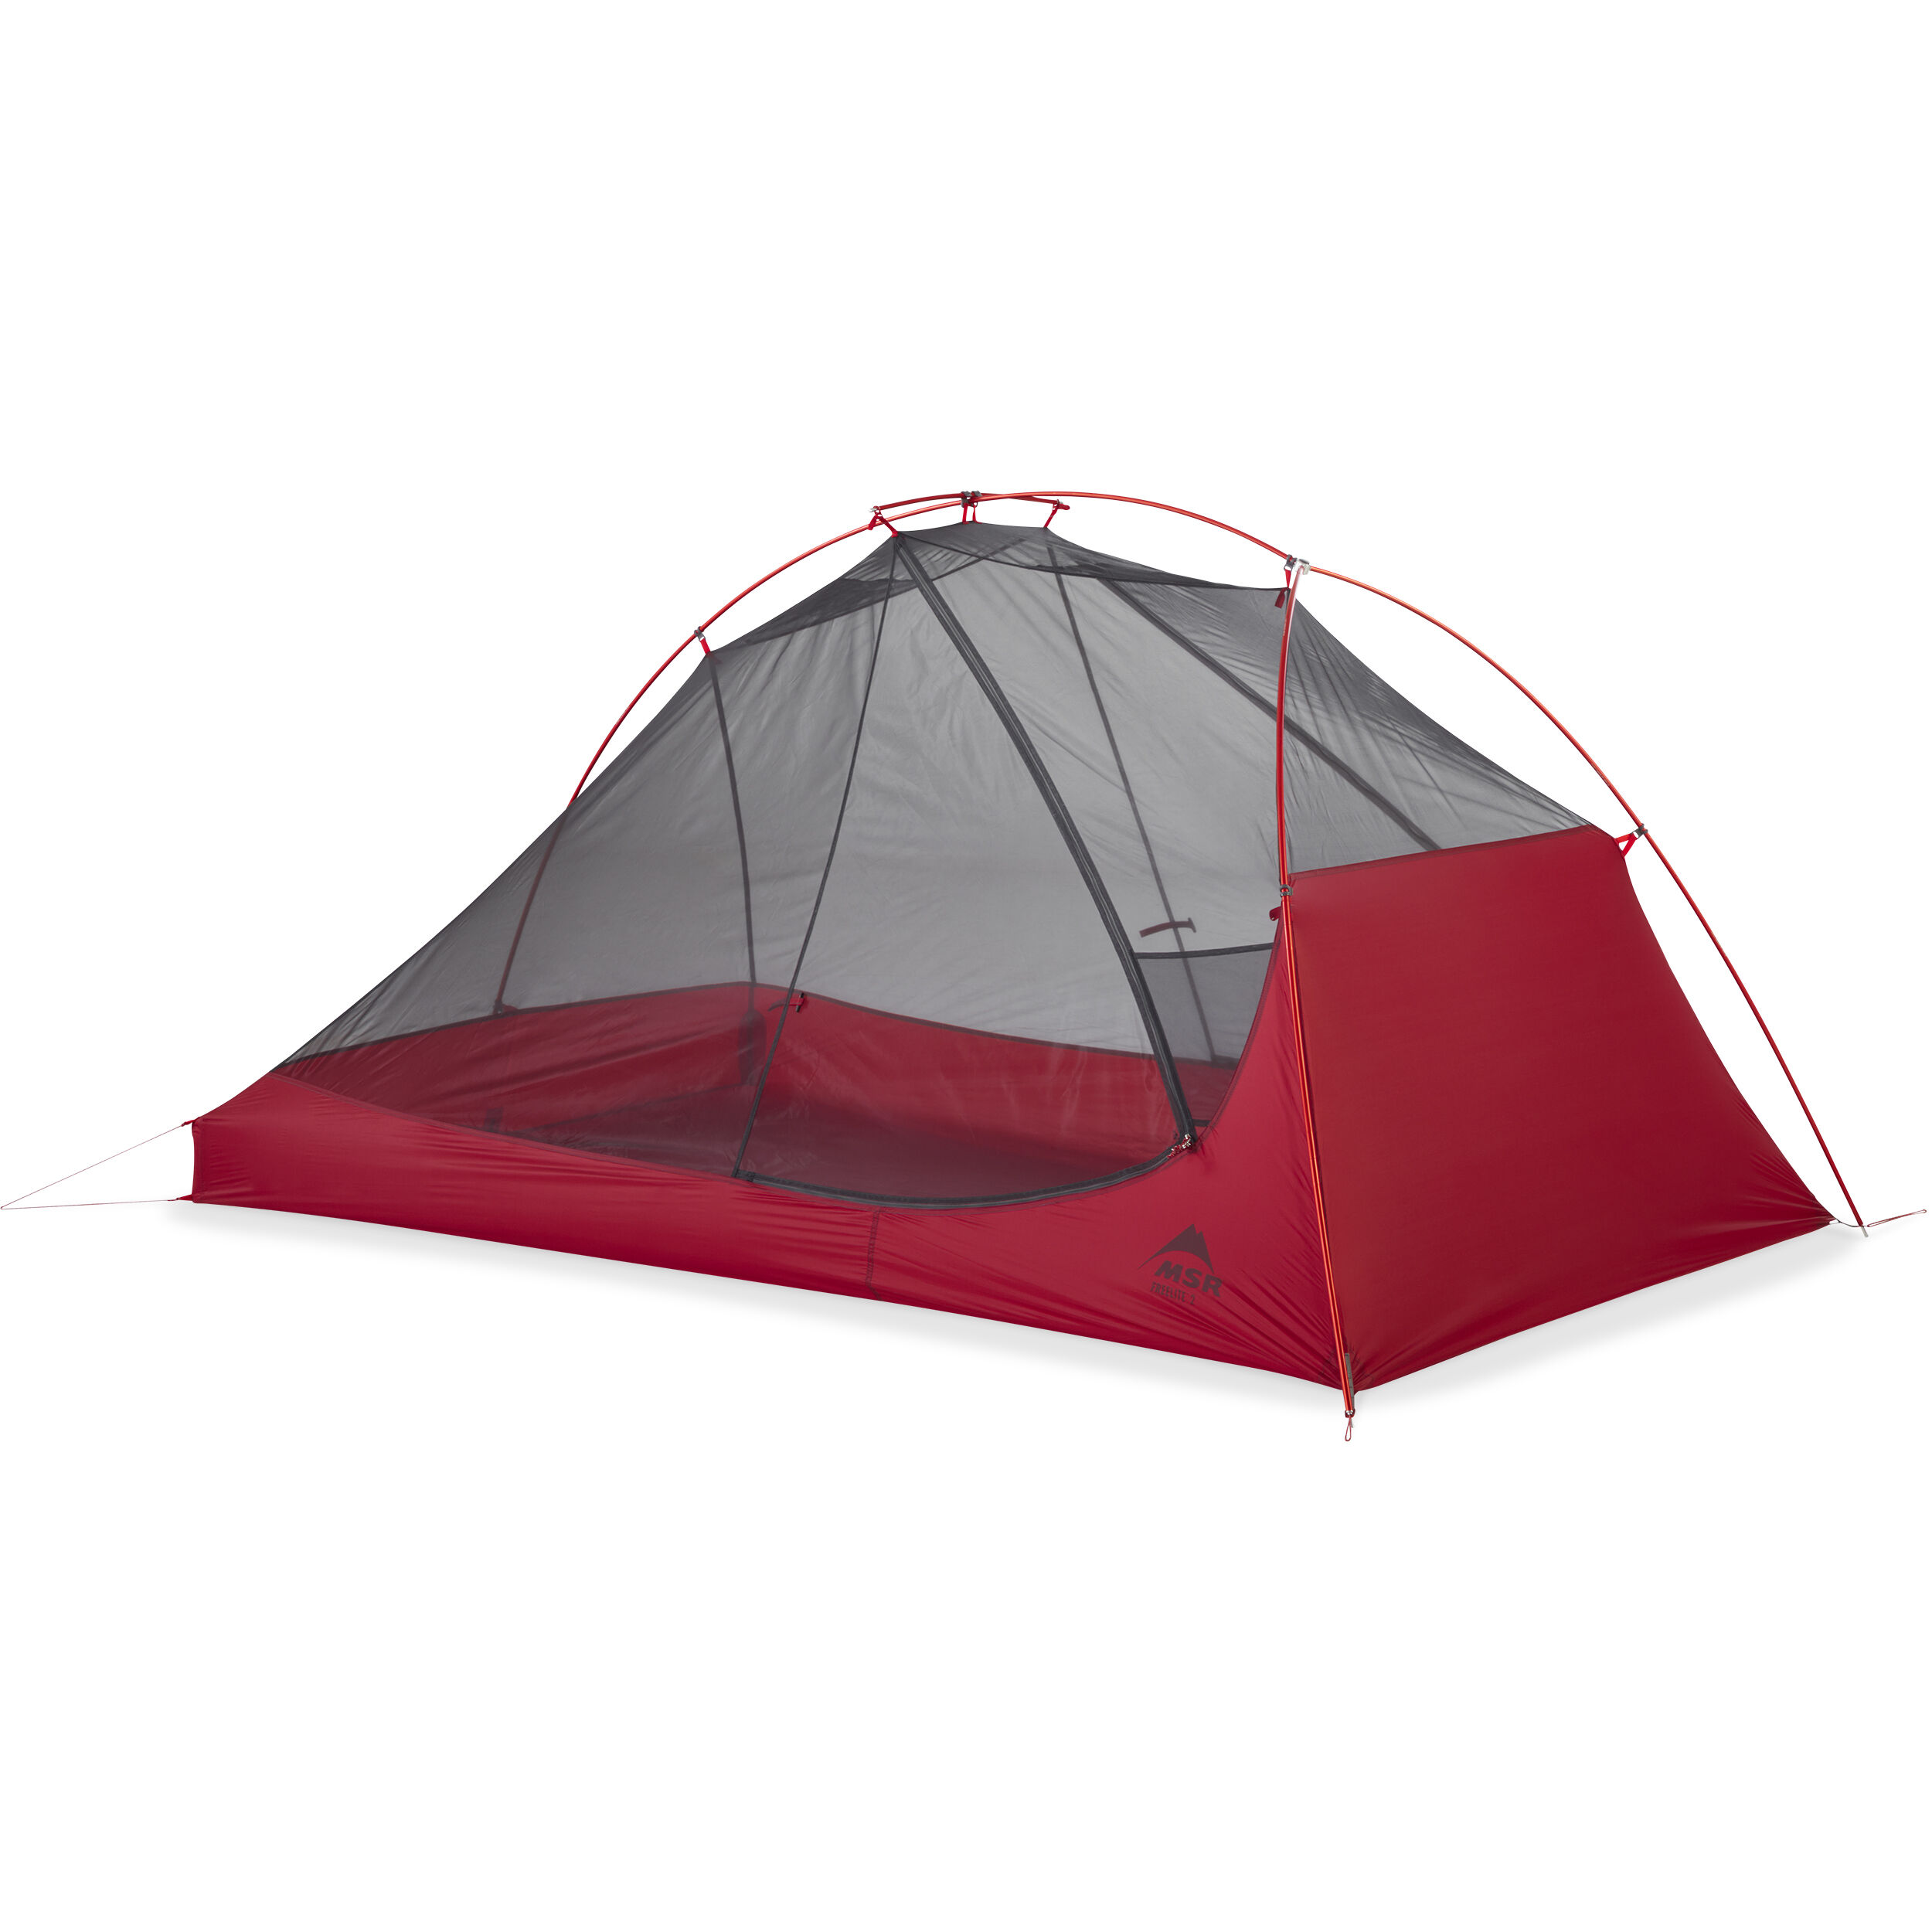 FreeLite™ 2 Ultralight 2-Person Backpacking Tent | MSR®